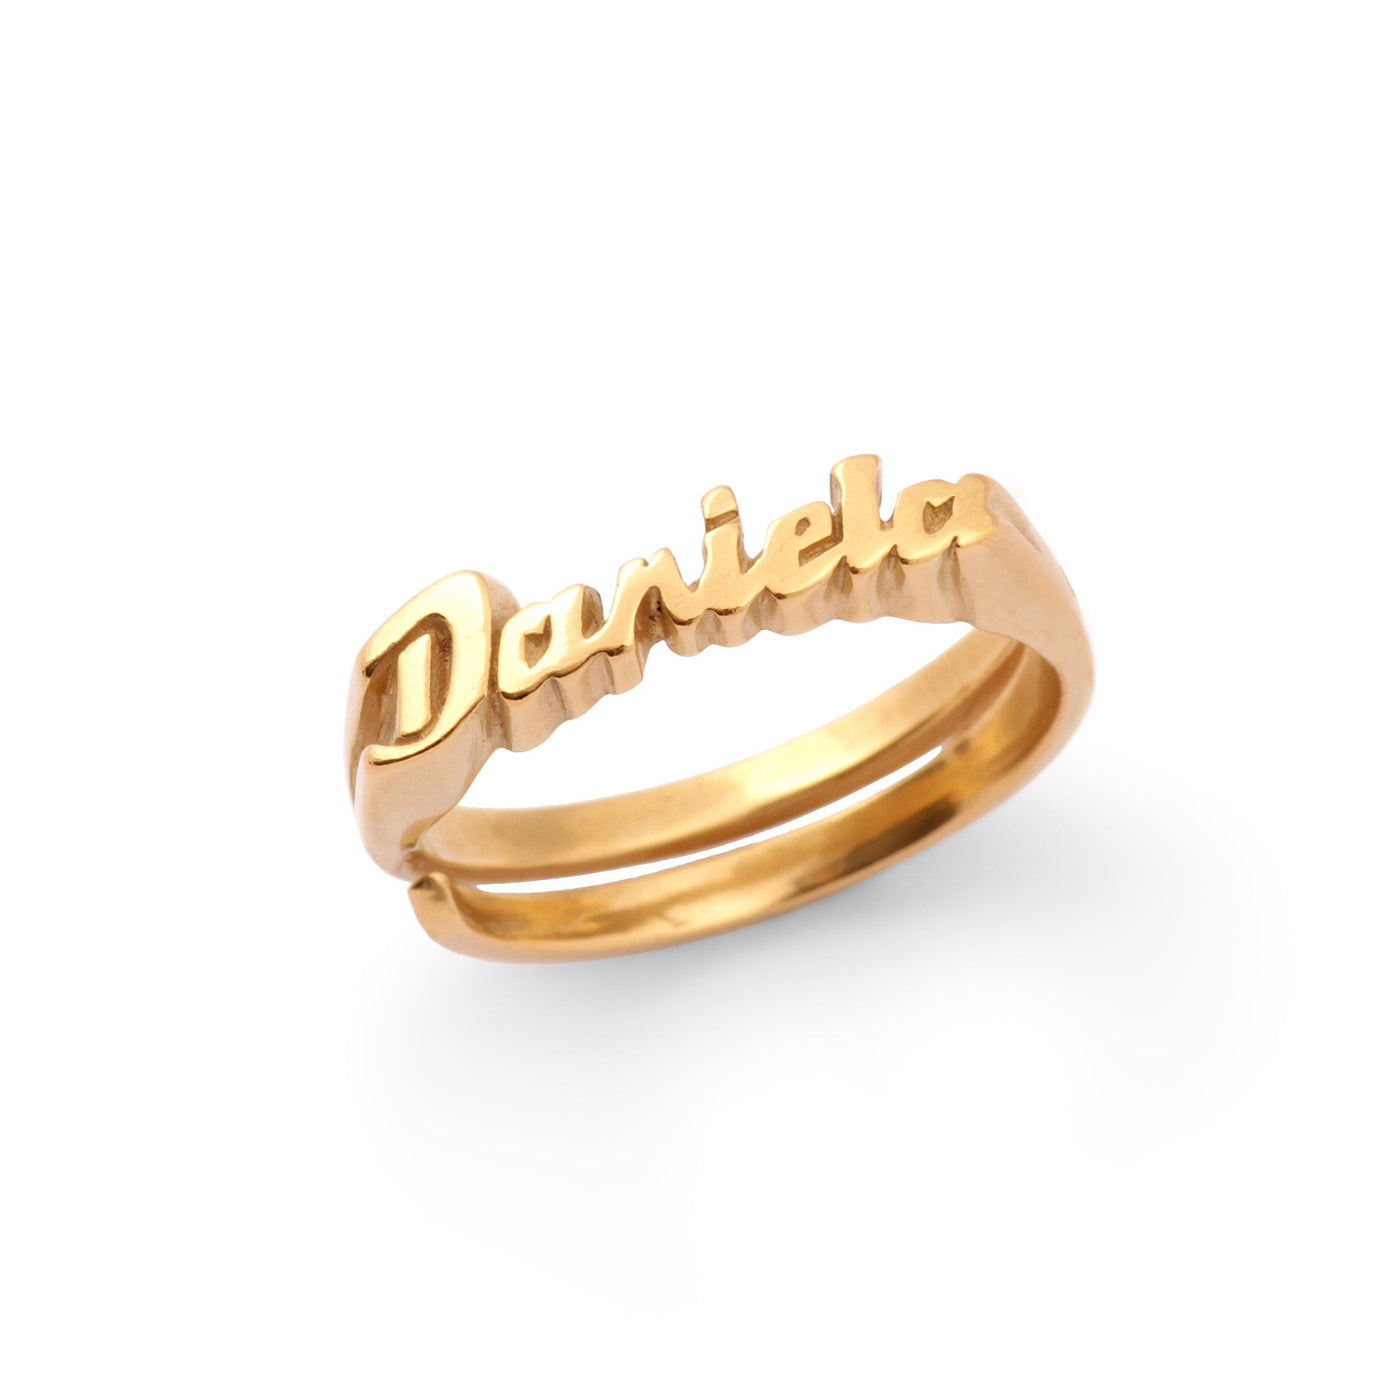 Daniela Bar Ring